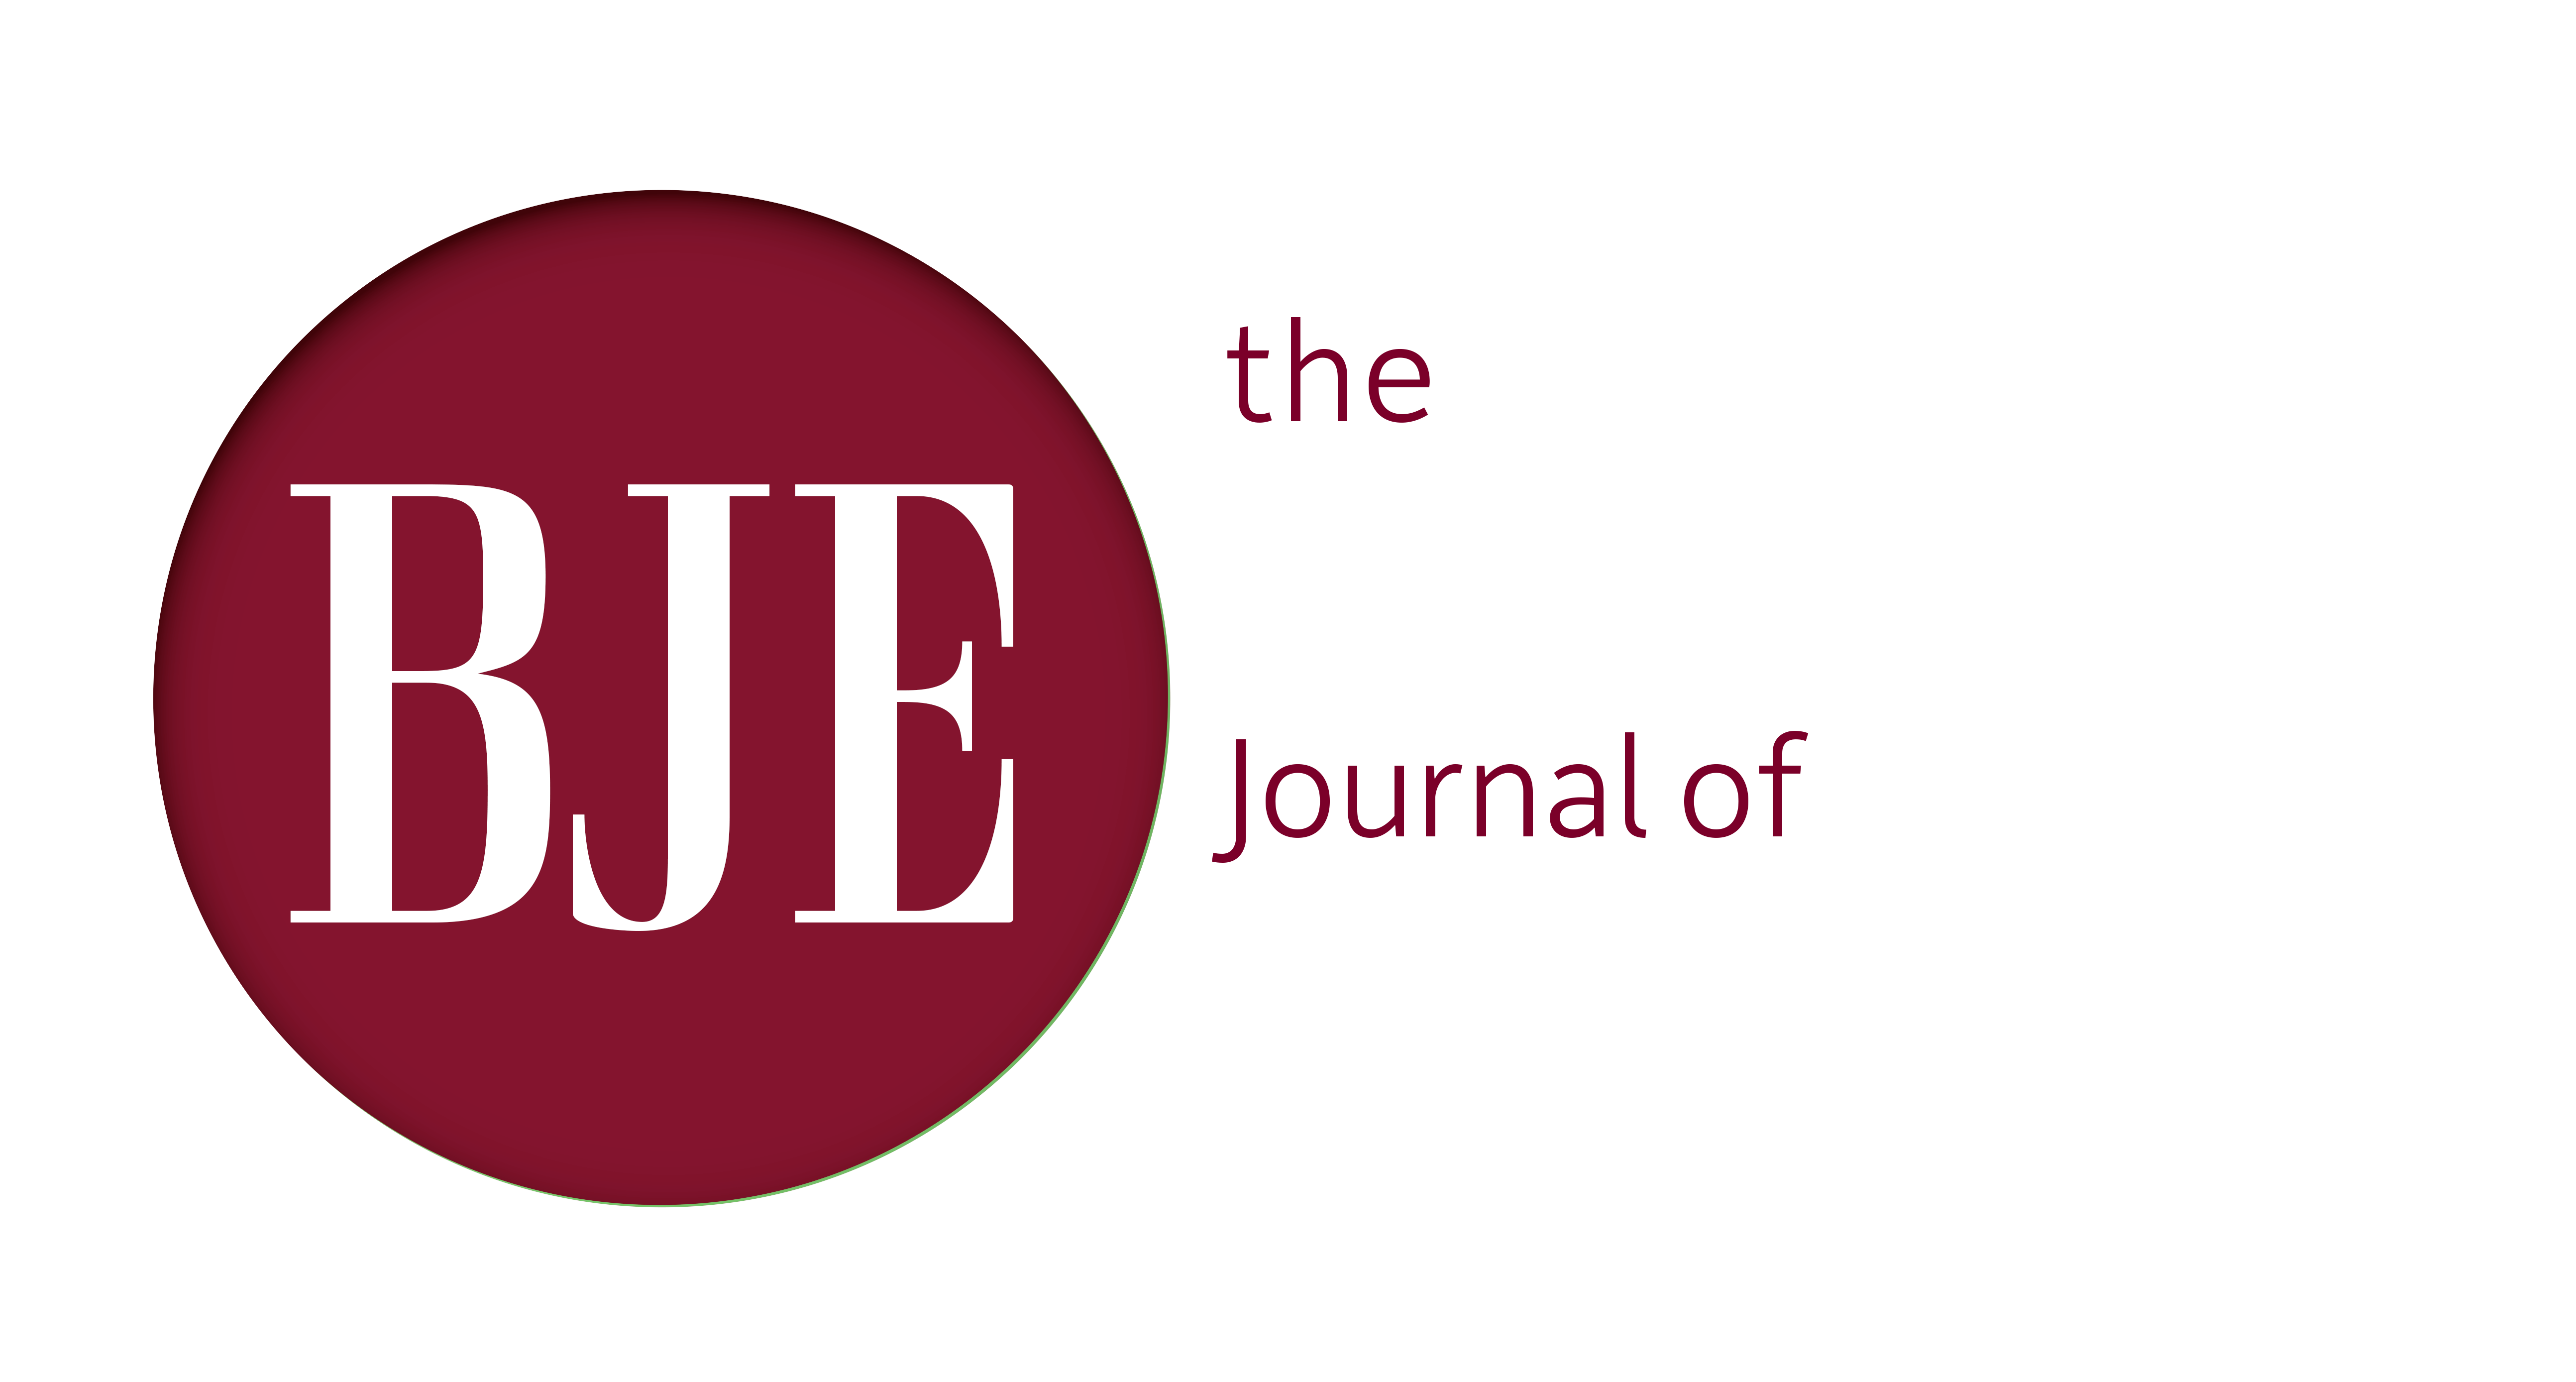 The Buckingham Journal of Education